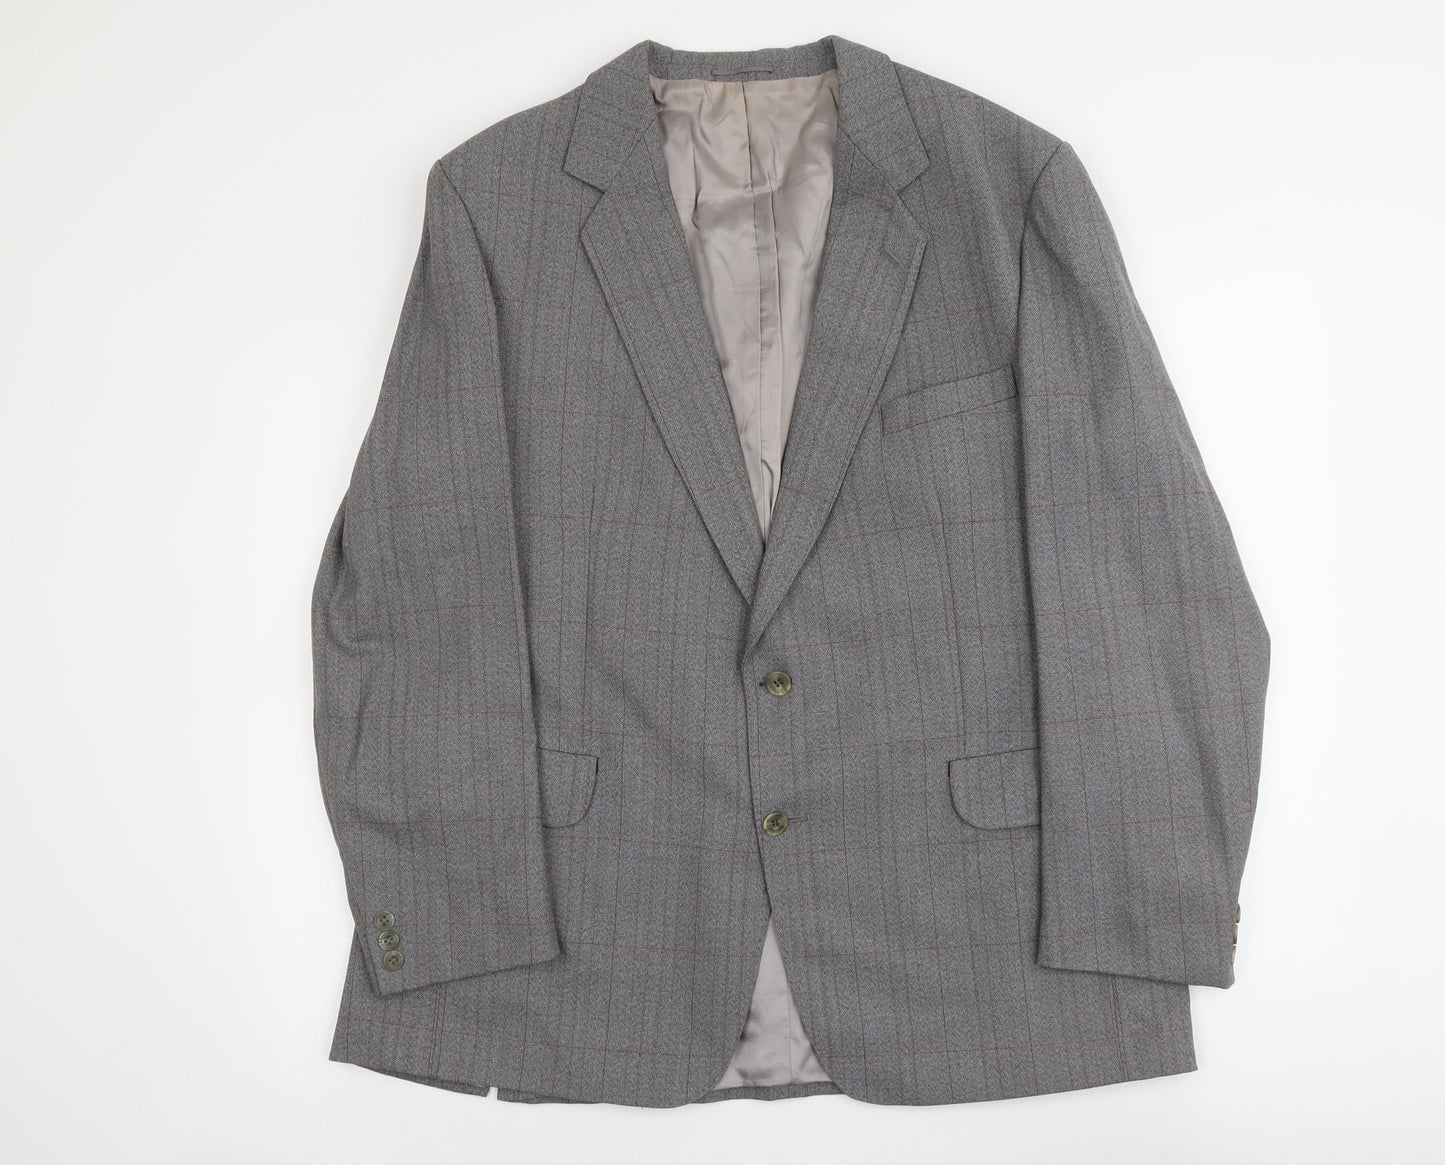 Magee Mens Grey Check Wool Jacket Suit Jacket Size XL Regular